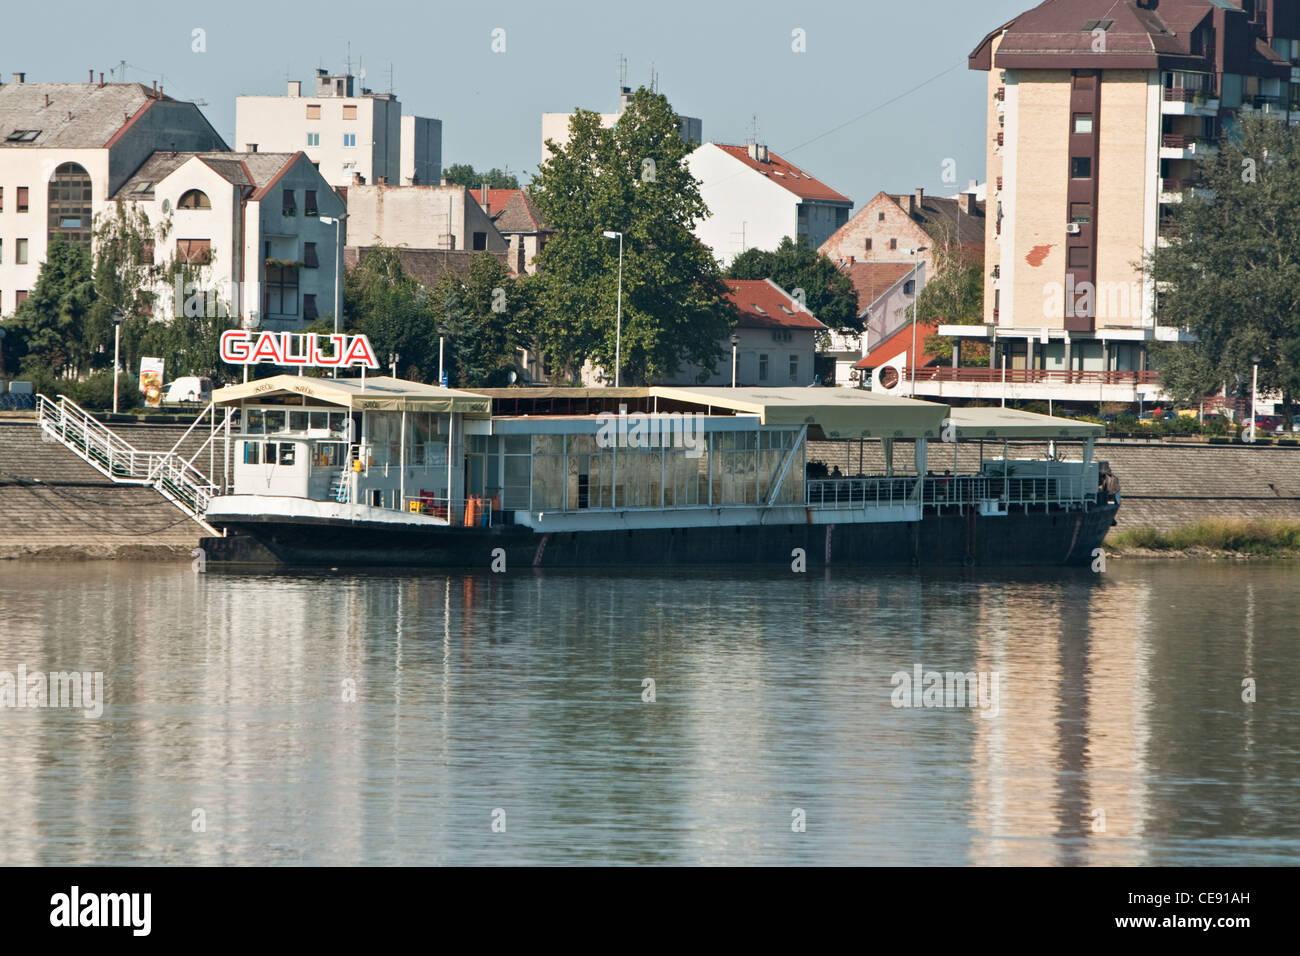 Osijek, Croatia. Galija restaurant boat on River Drava Stock Photo